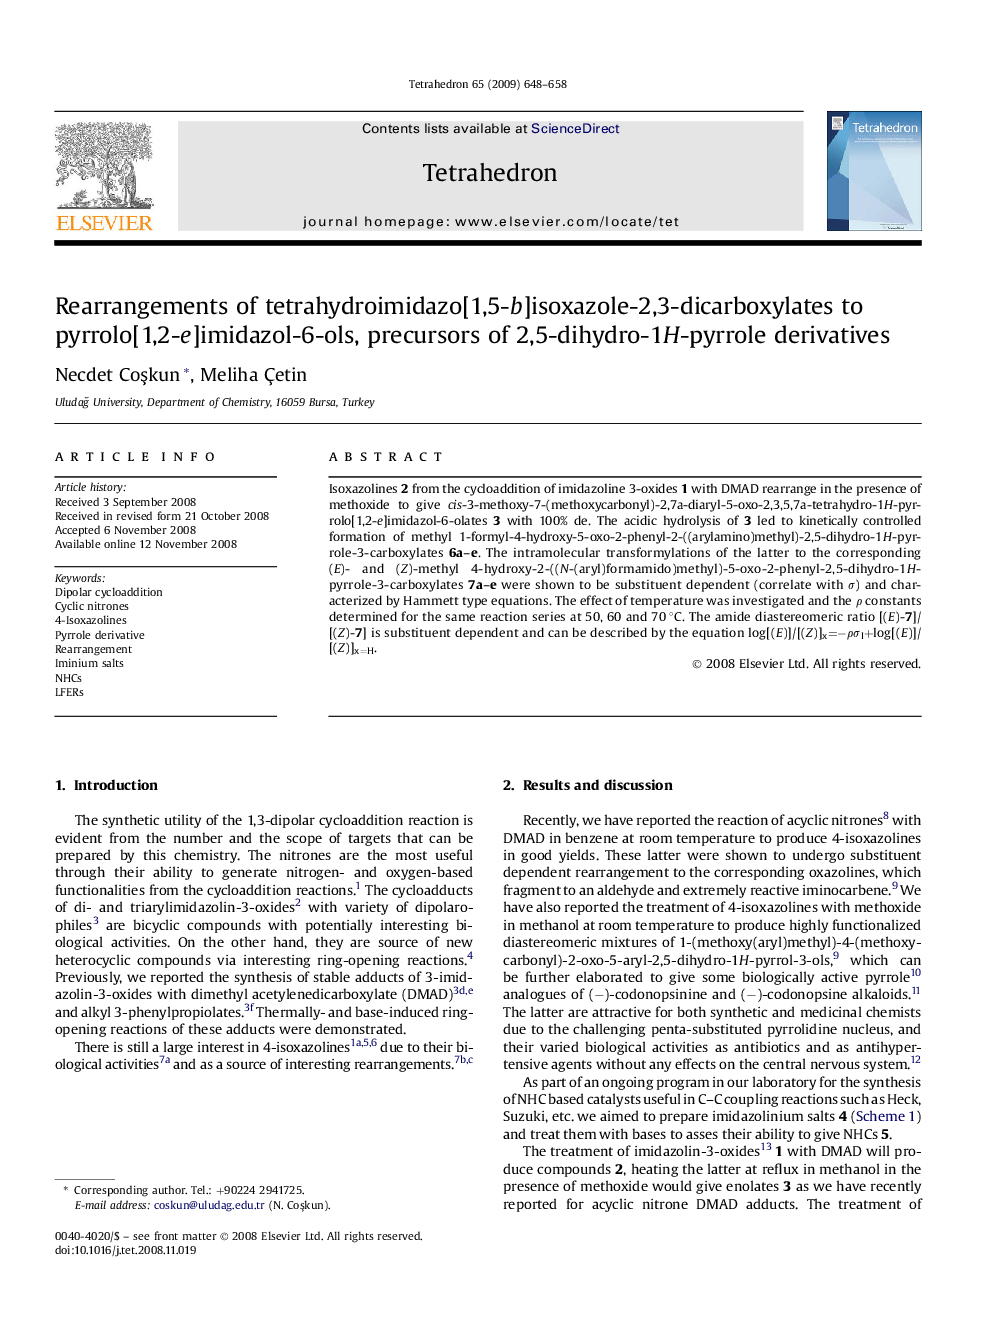 Rearrangements of tetrahydroimidazo[1,5-b]isoxazole-2,3-dicarboxylates to pyrrolo[1,2-e]imidazol-6-ols, precursors of 2,5-dihydro-1H-pyrrole derivatives